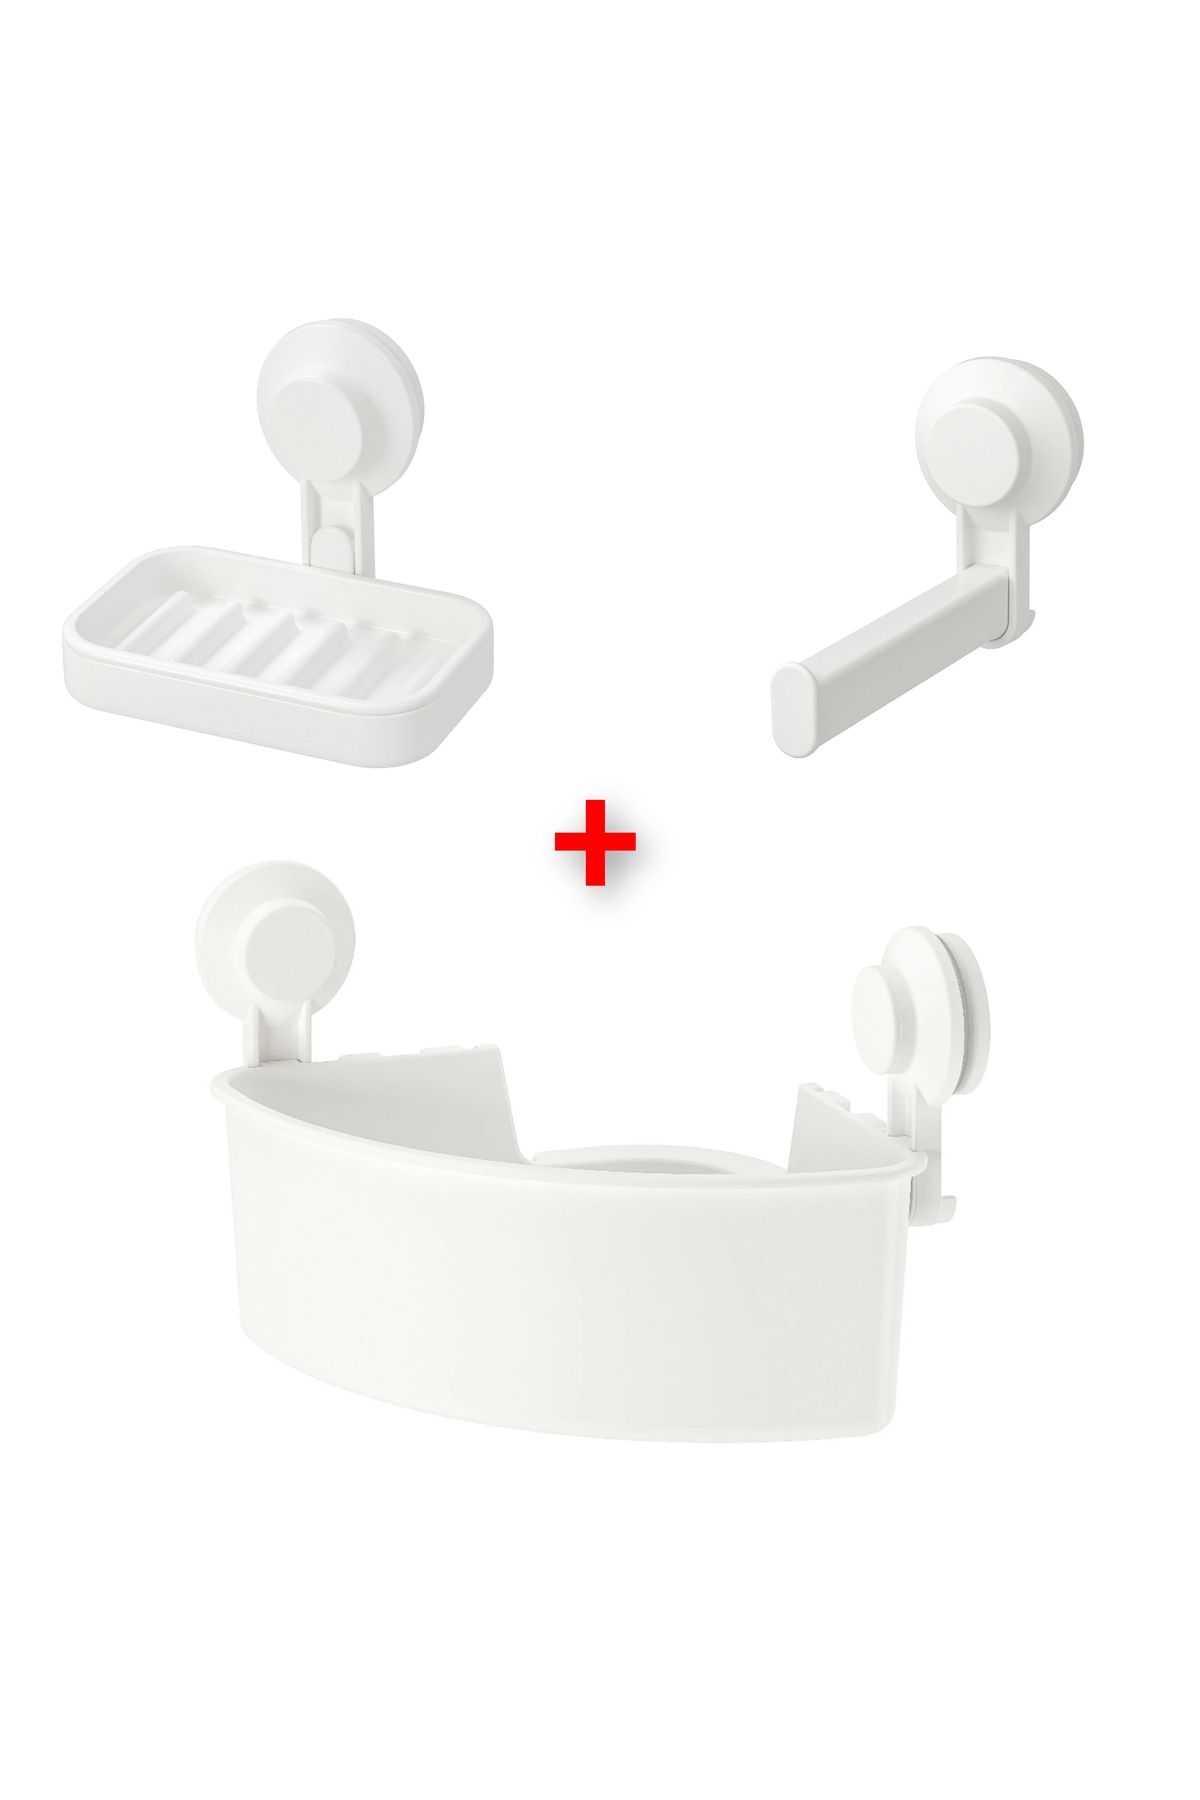 IKEA 3 Parça Vantuzlu Banyo Seti İkea Köşe Duş Sepeti, Sabunluk ve Tuvalet Kağıtlığı Plastik